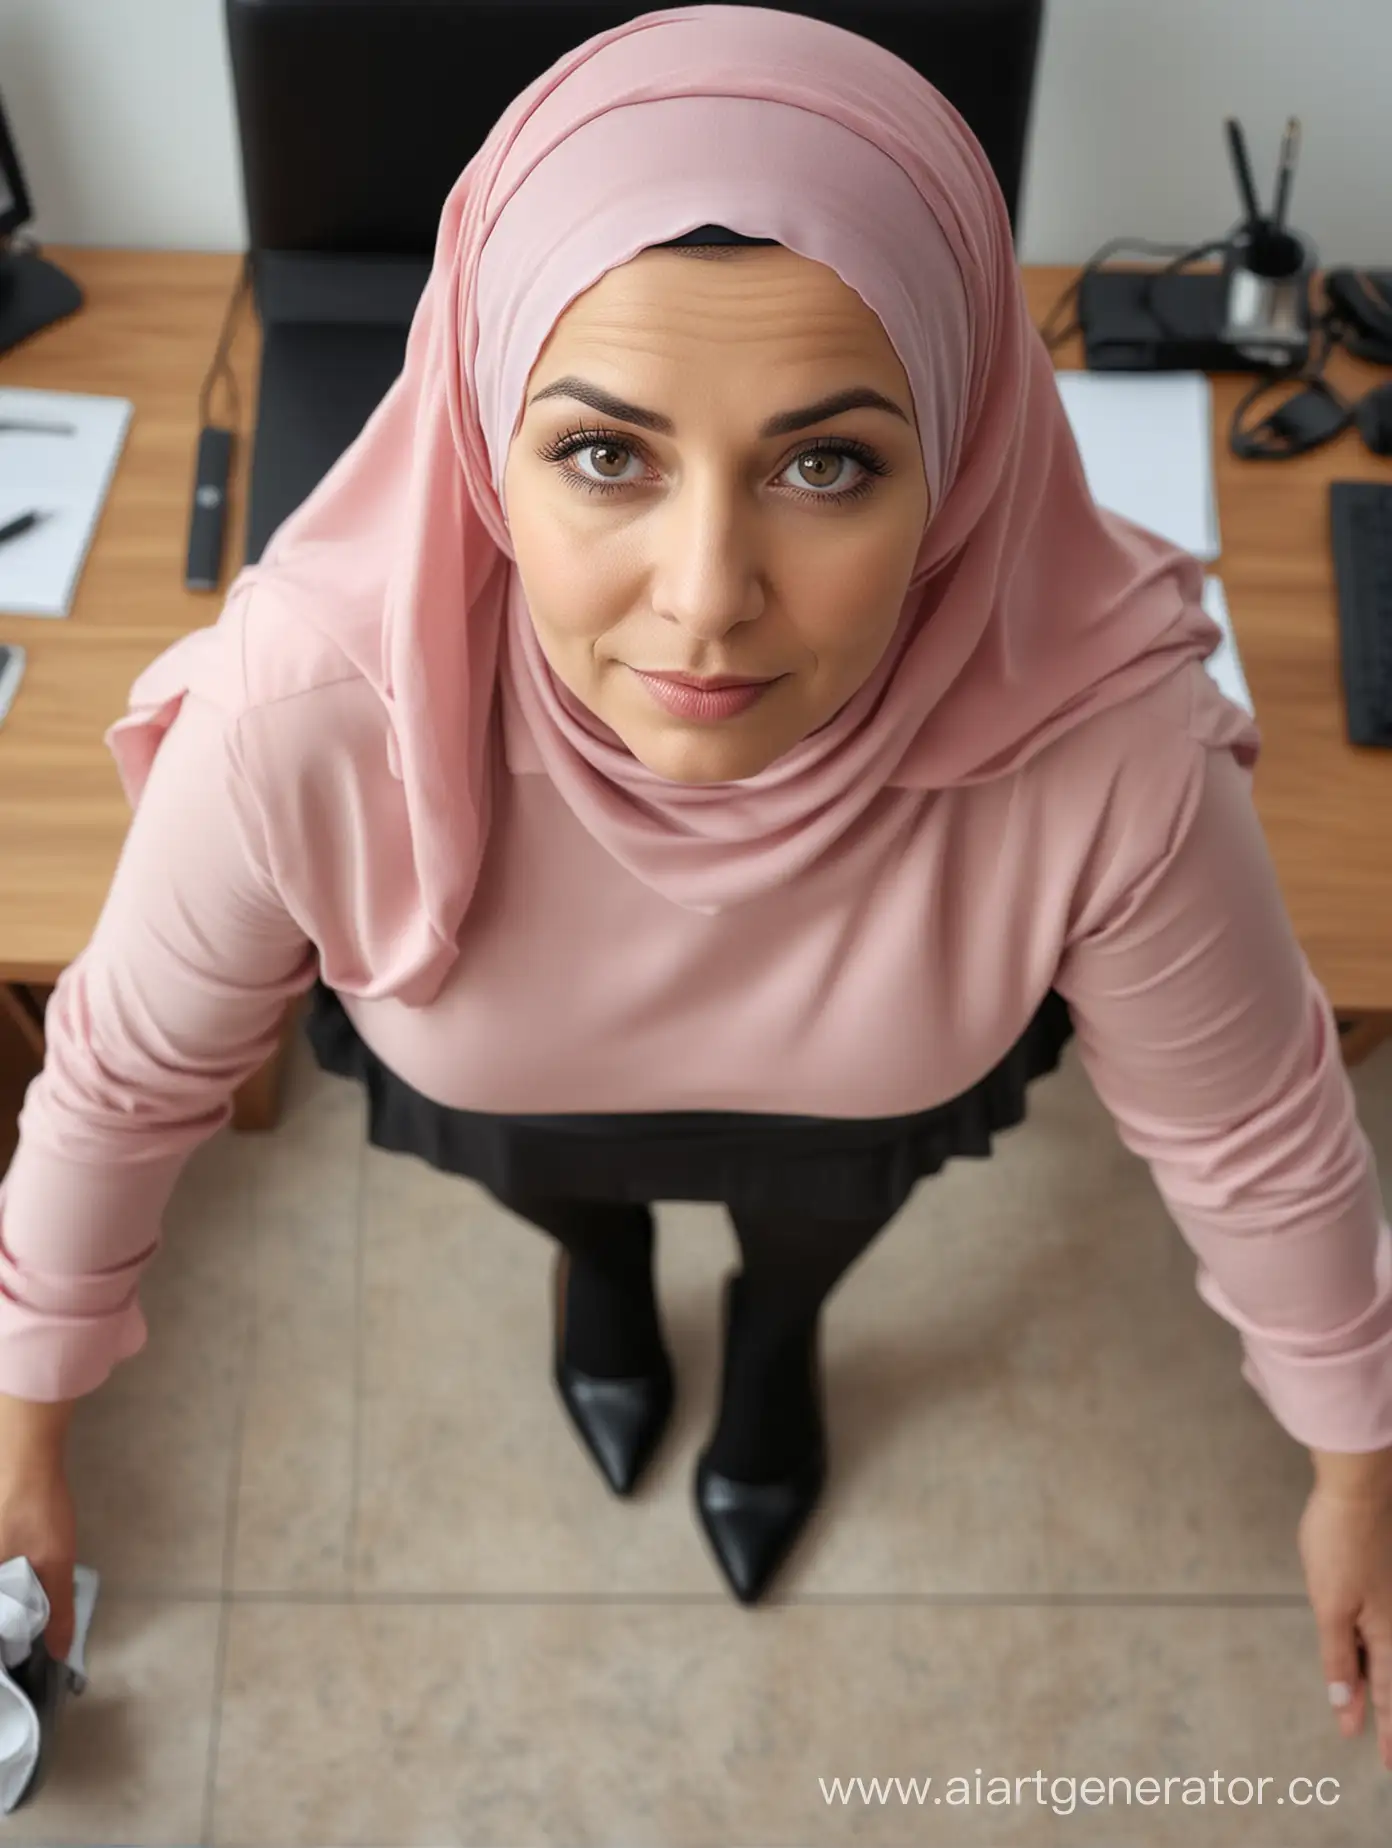 Elegant-60YearOld-Dwarf-Woman-in-Hijab-and-Office-Attire